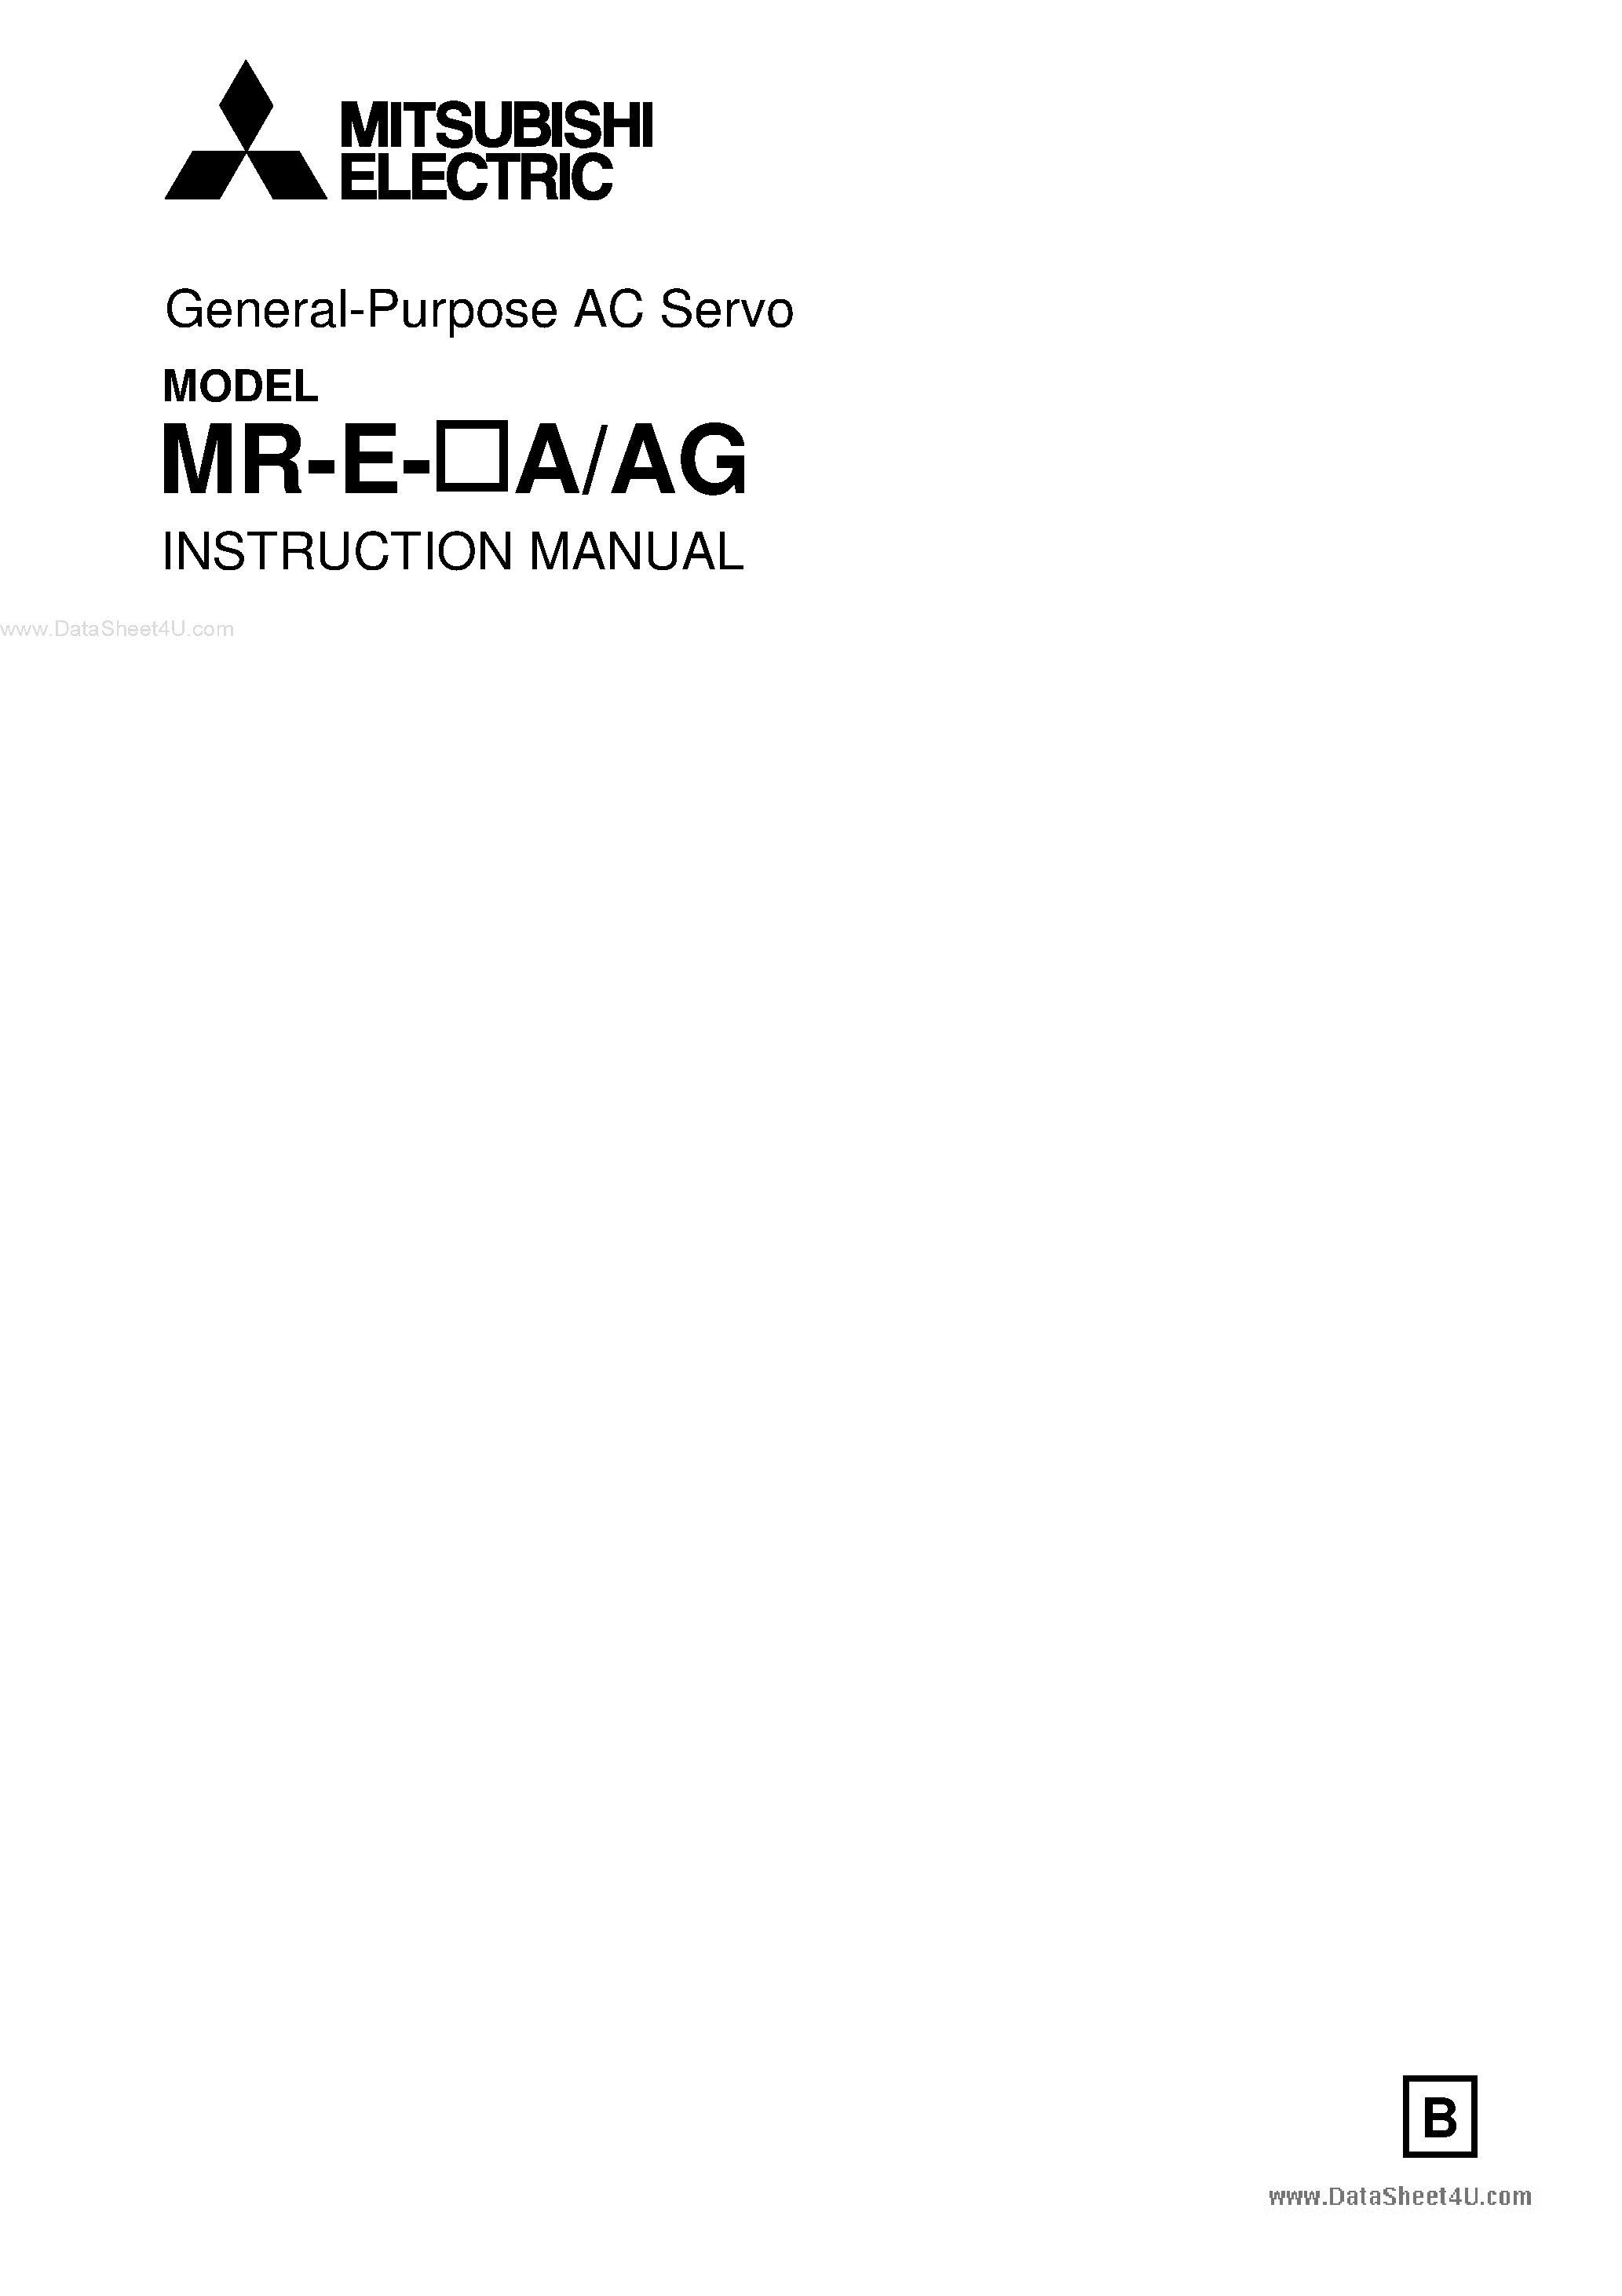 Даташит MR-E-100A - General Purpose AC Servo страница 1